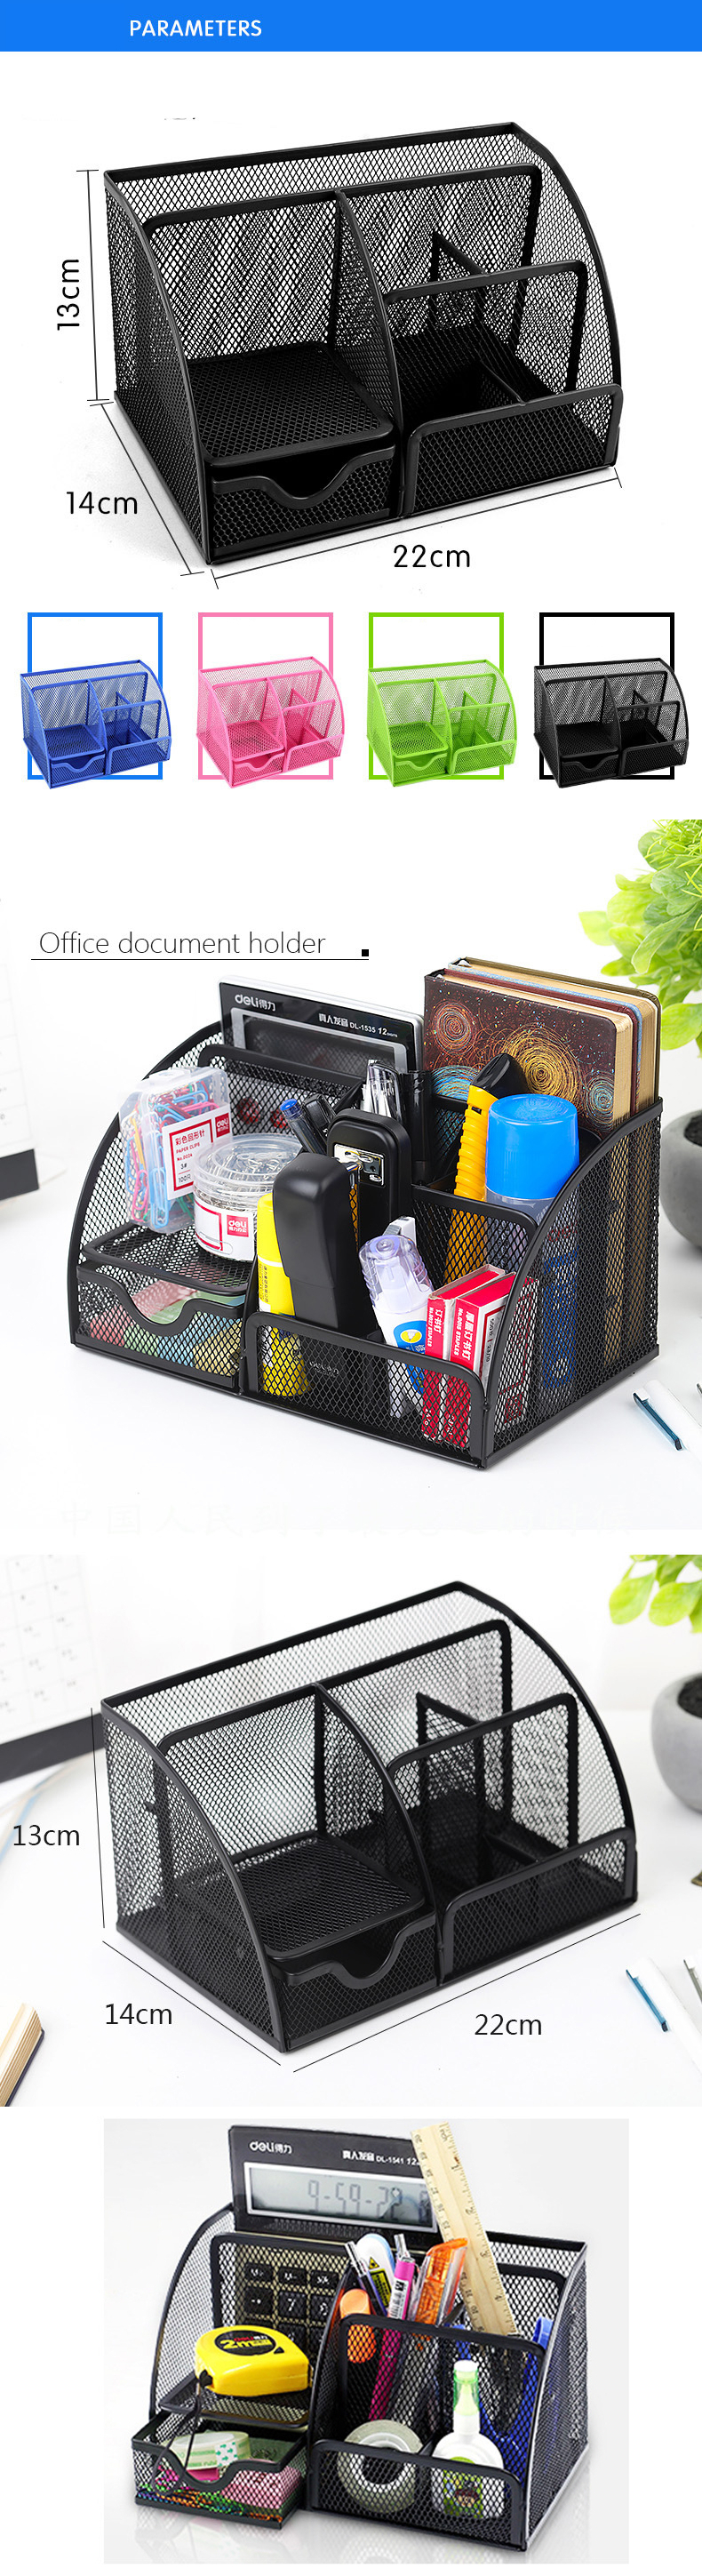 Metal-Pen-Holder-Desktop-Organizer-Student-Cosmetic-Makeup-Storage-Box-Racks-7-Grids-desk-Accessorie-1559999-1